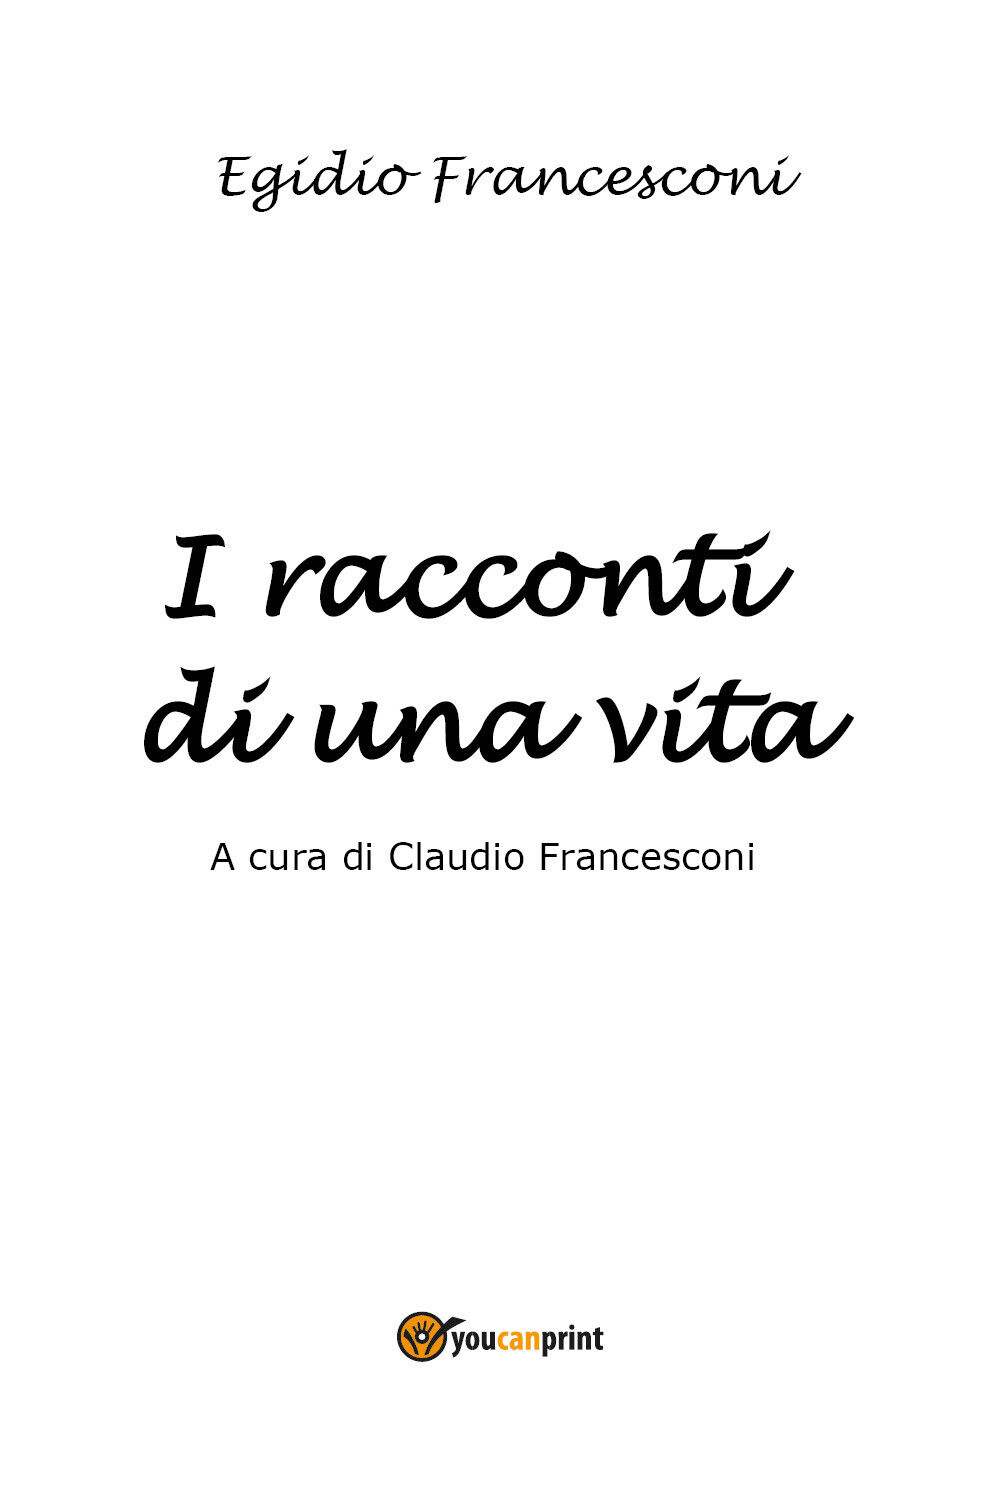 I racconti di una vita di Claudio Francesconi,  2021,  Youcanprint